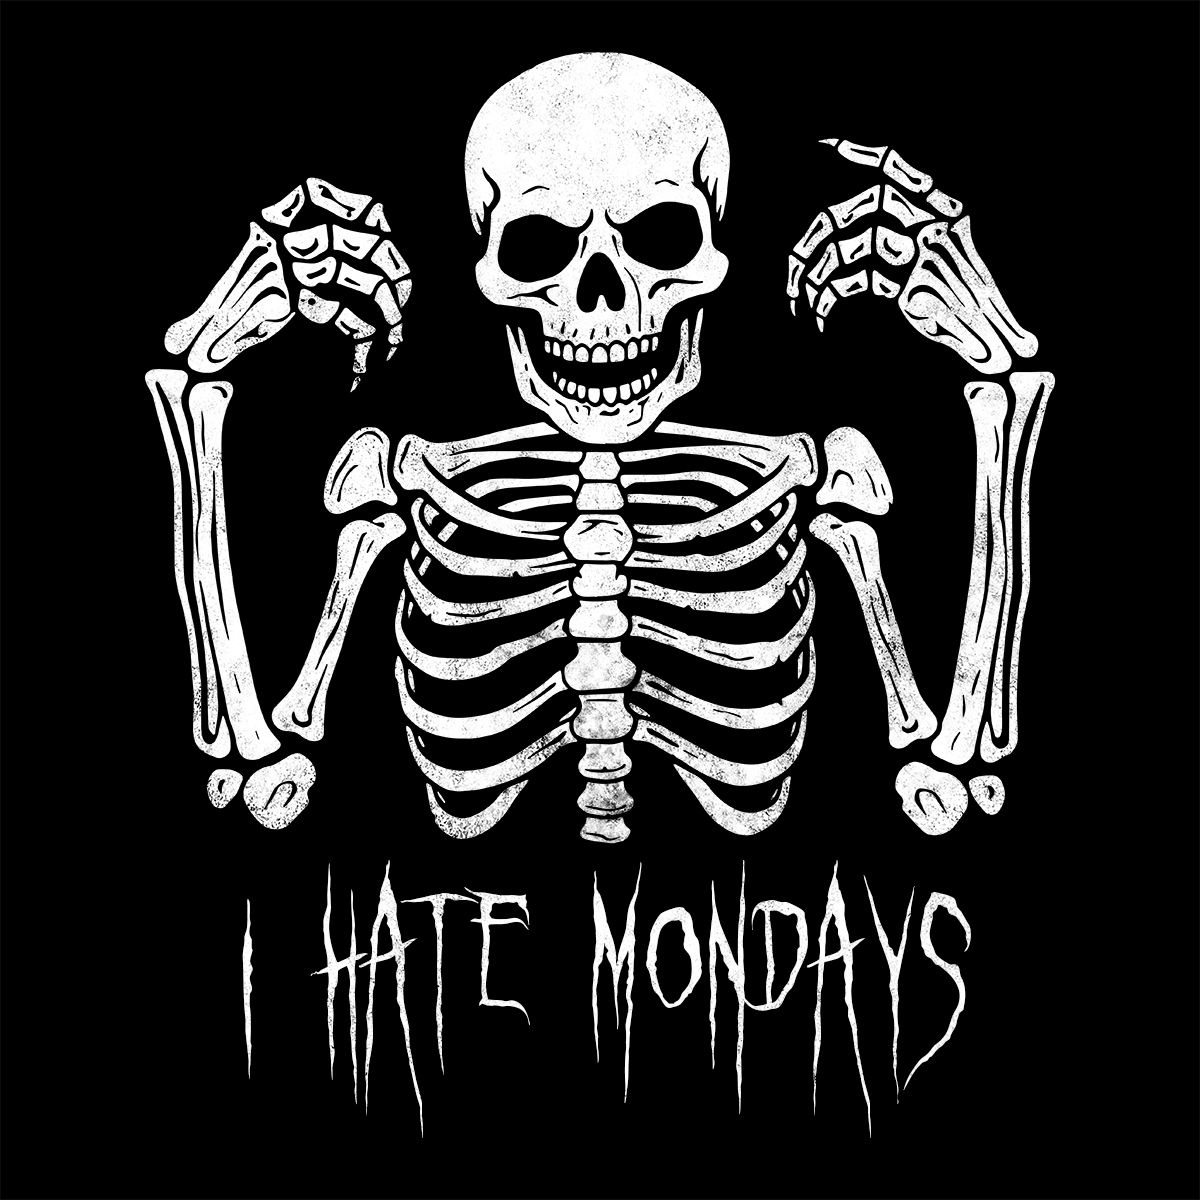 Skelly hates Mondays